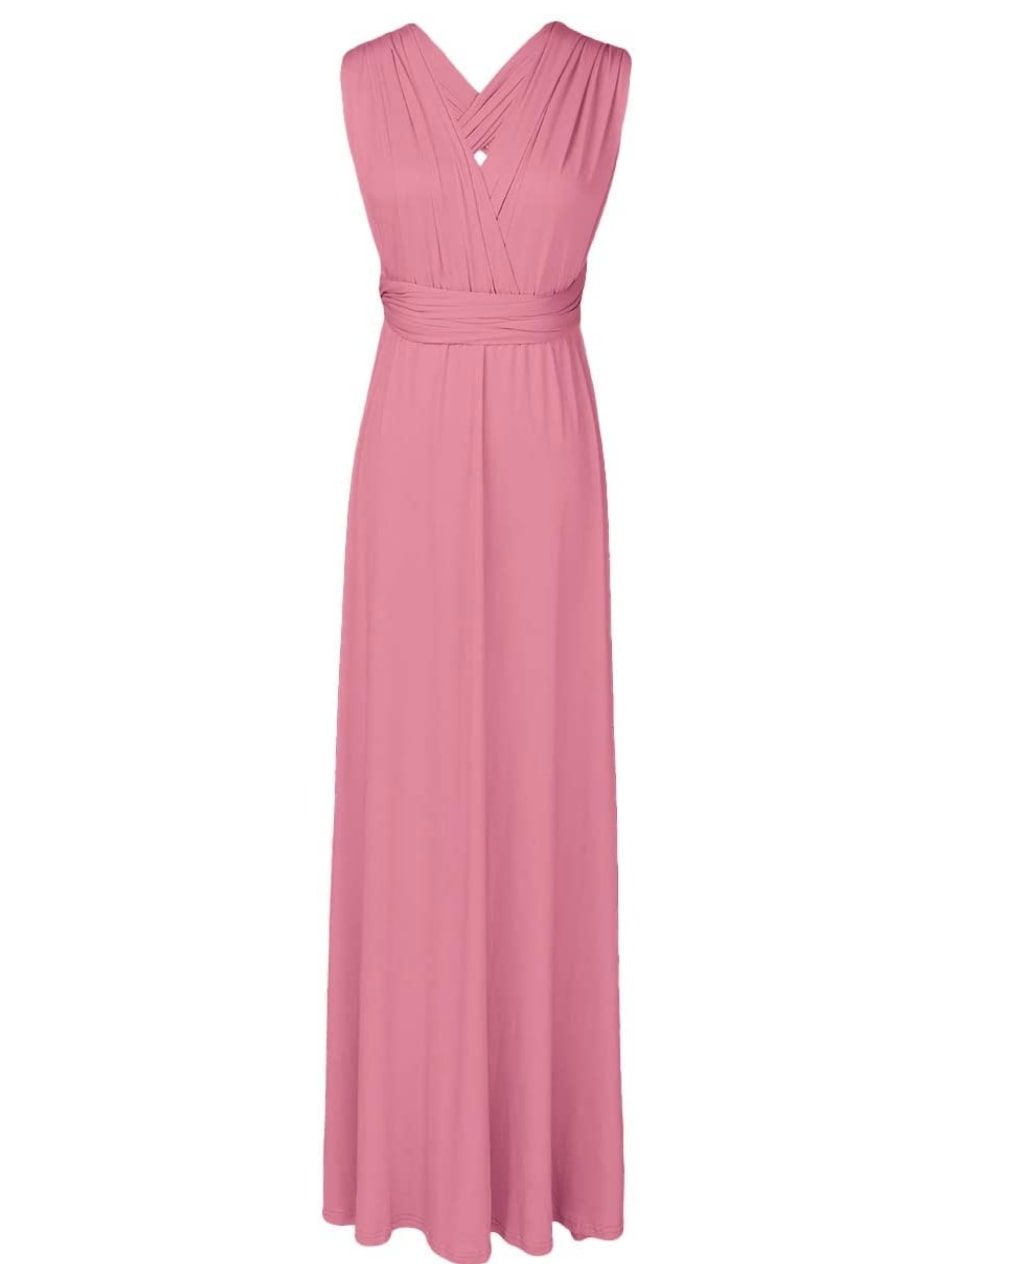 Style B073CGBPLG IWEMEK Size 0 Bridesmaid Pink Floor Length Maxi on Queenly